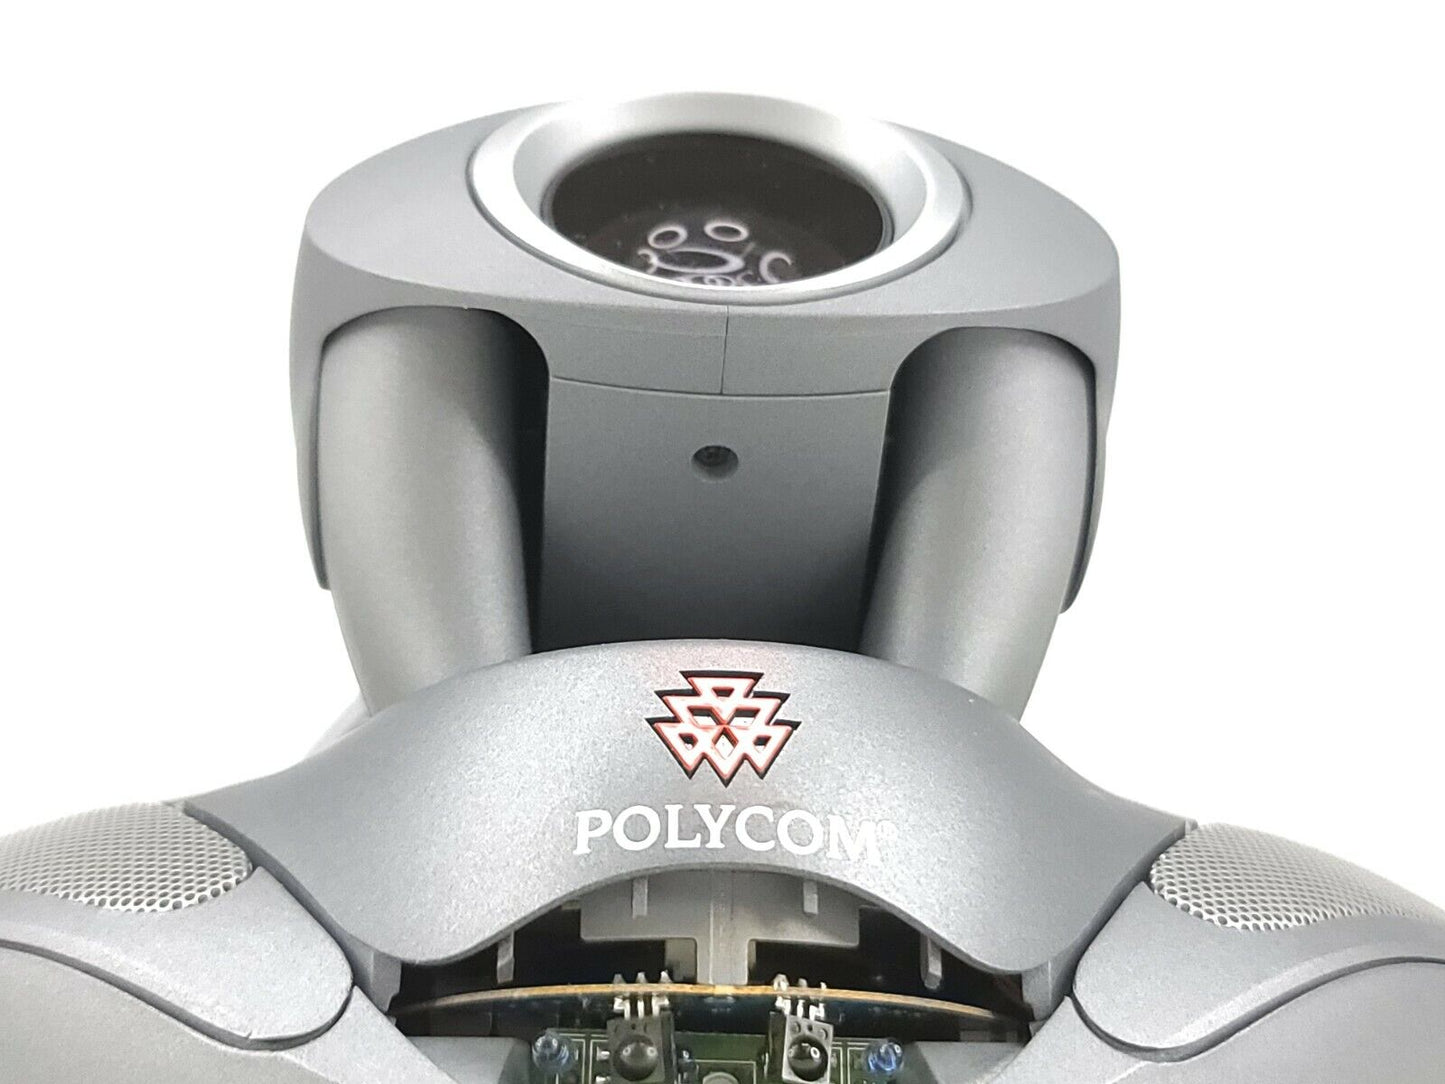 POLYCOM VSX 7000 VIDEO CONFERENCING SYSTEM CAMERA